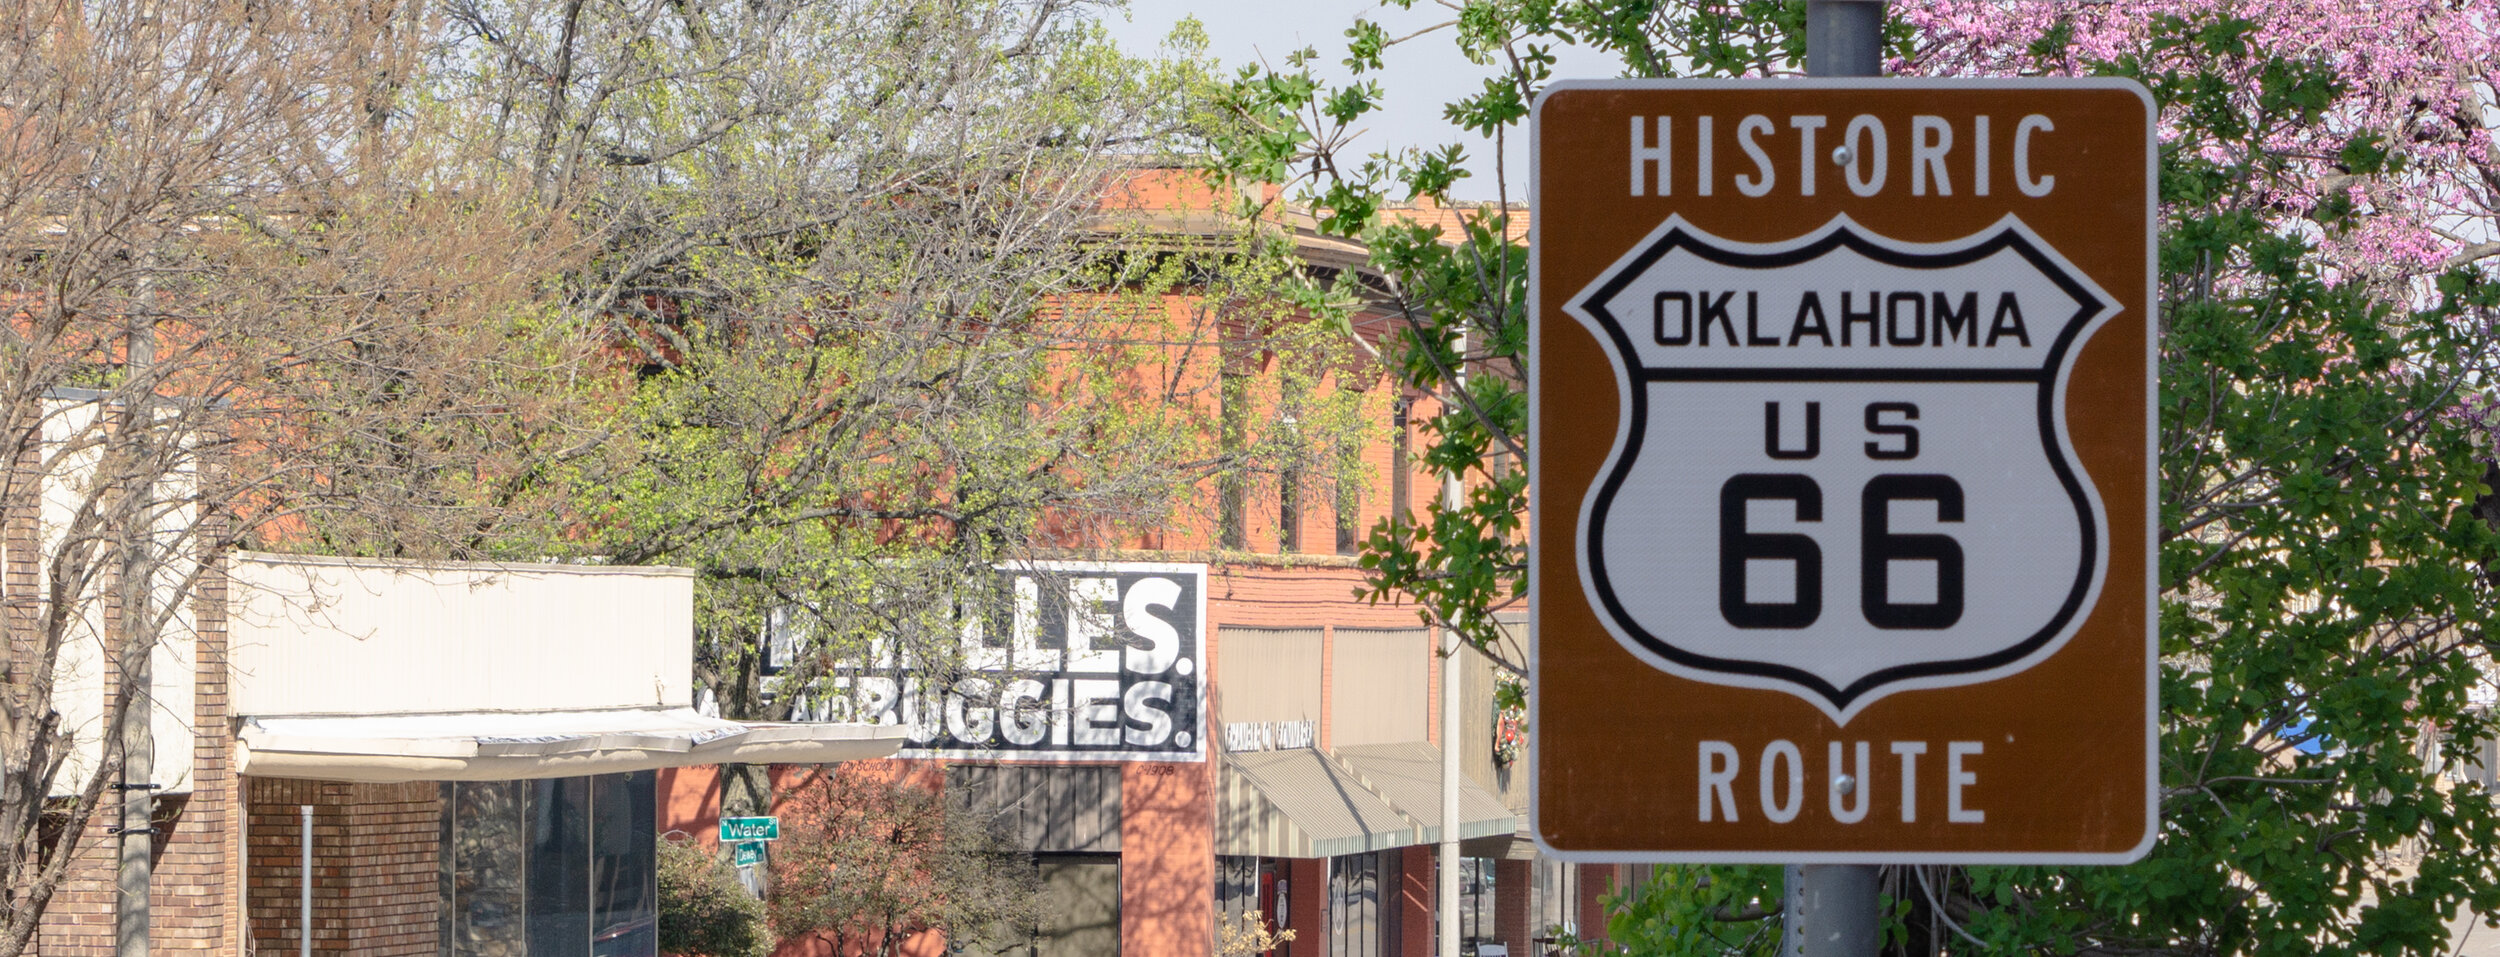 How To Travel Ok Route 66 — Oklahoma Route 66 Association